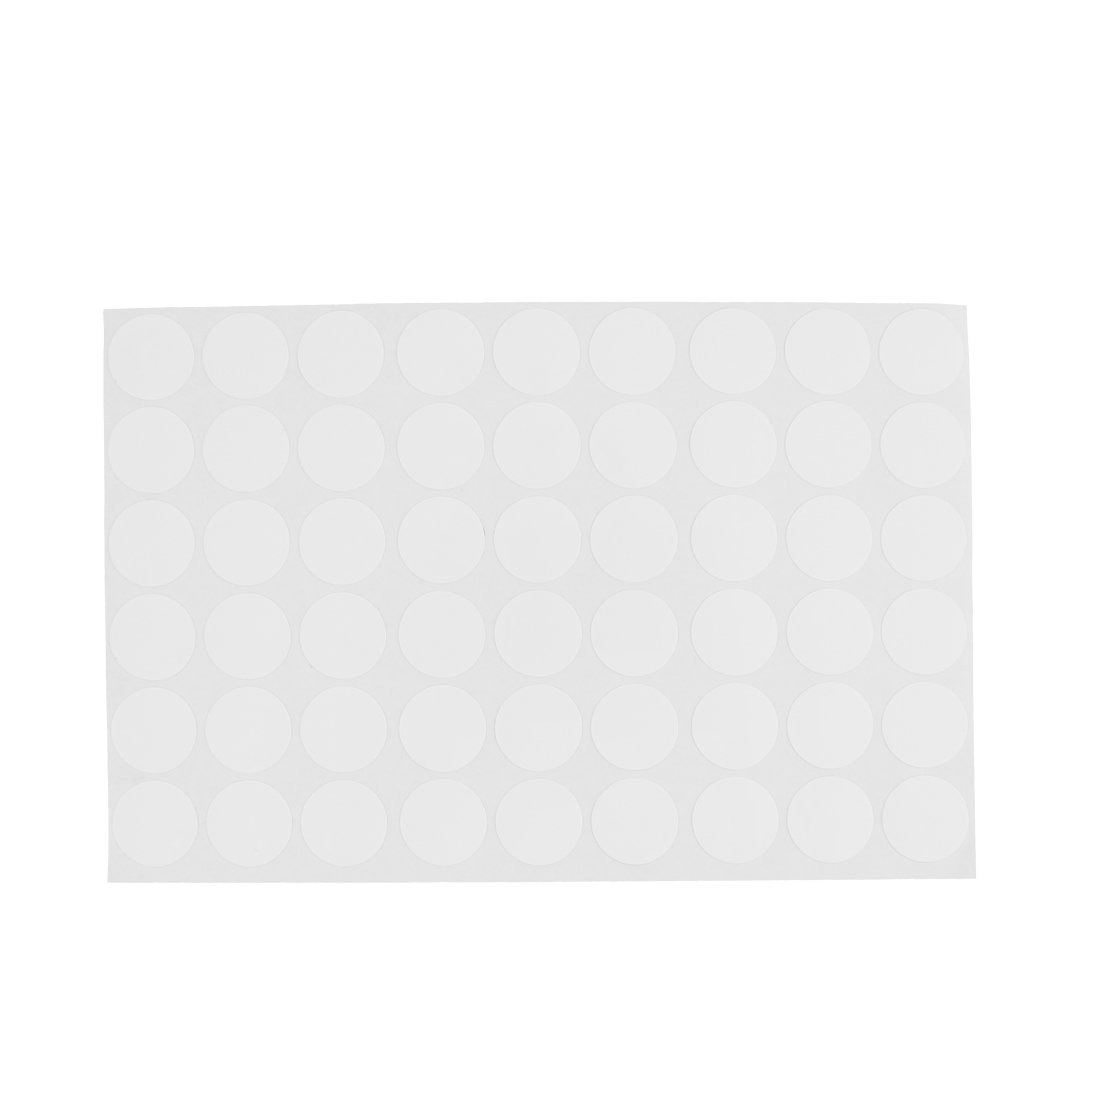 Abkm Garderobe Kast Zelfklevende Schroef Covers Caps Stickers Zelfklevende Schroef Covers 54 In 1 Wit